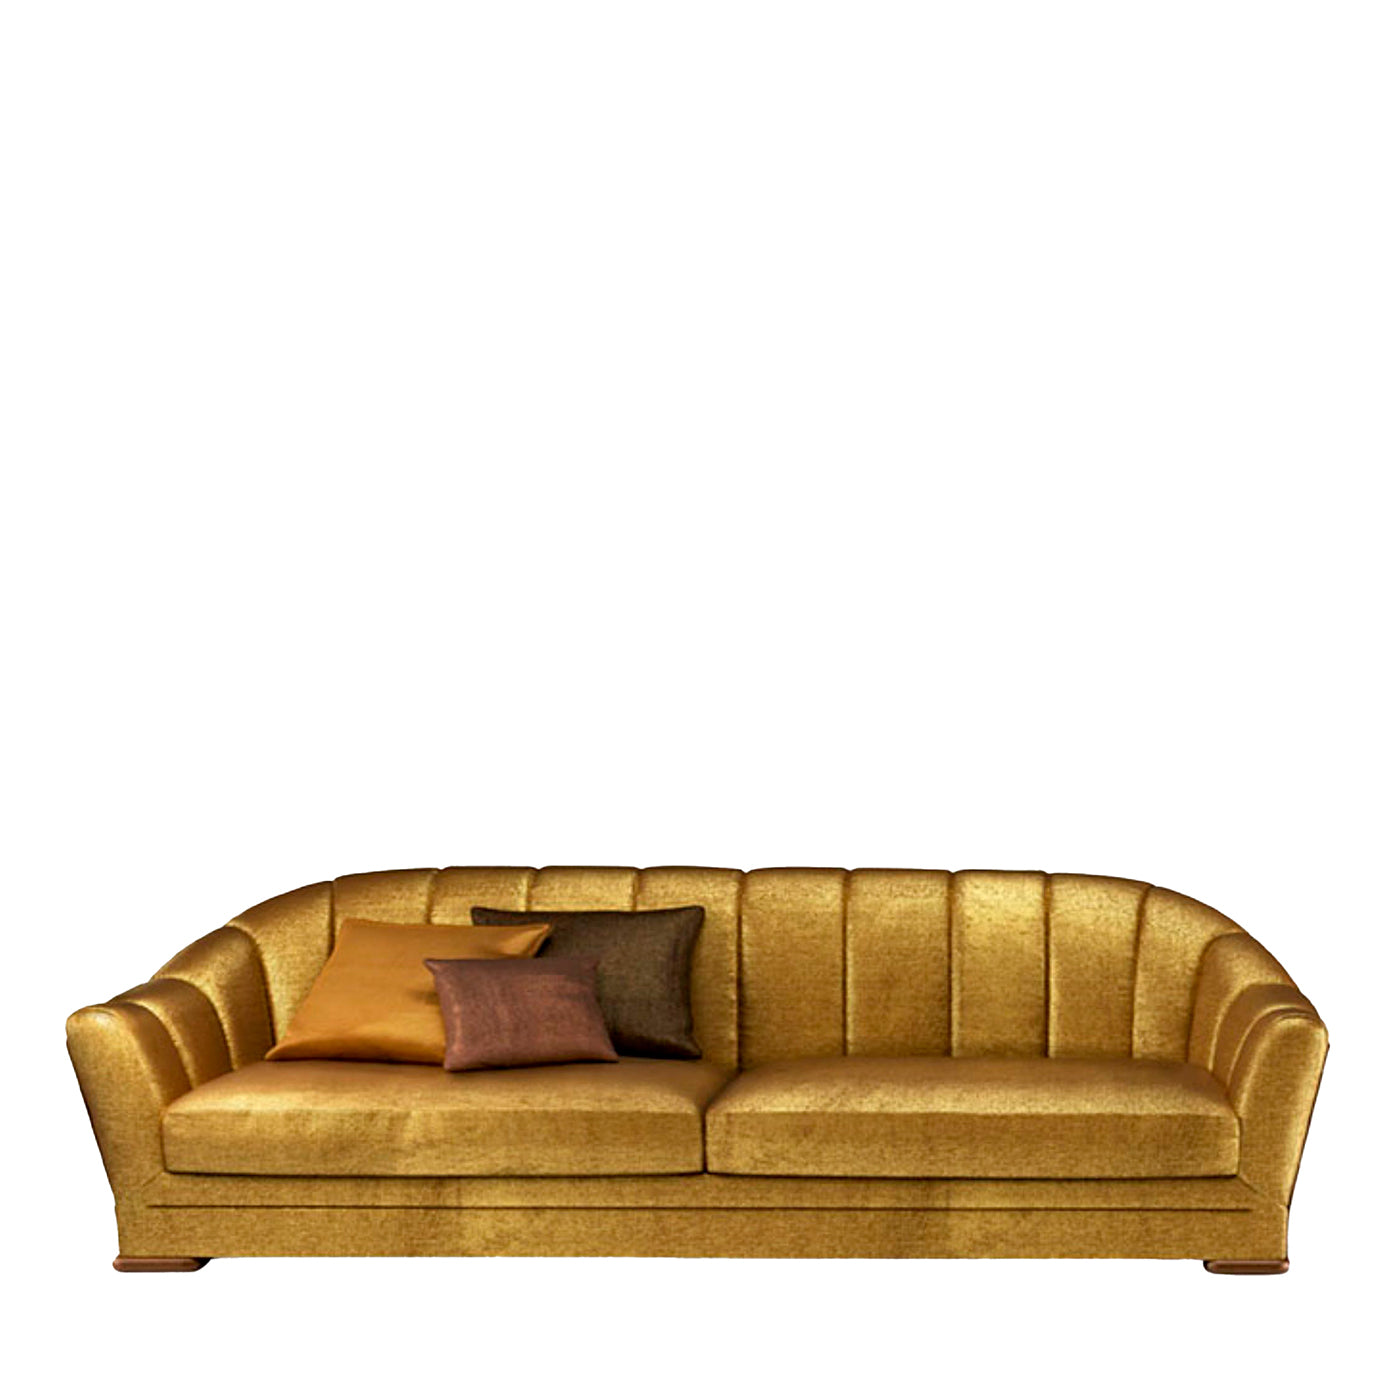 Diamond 4 seater Golden Sofa - Main view